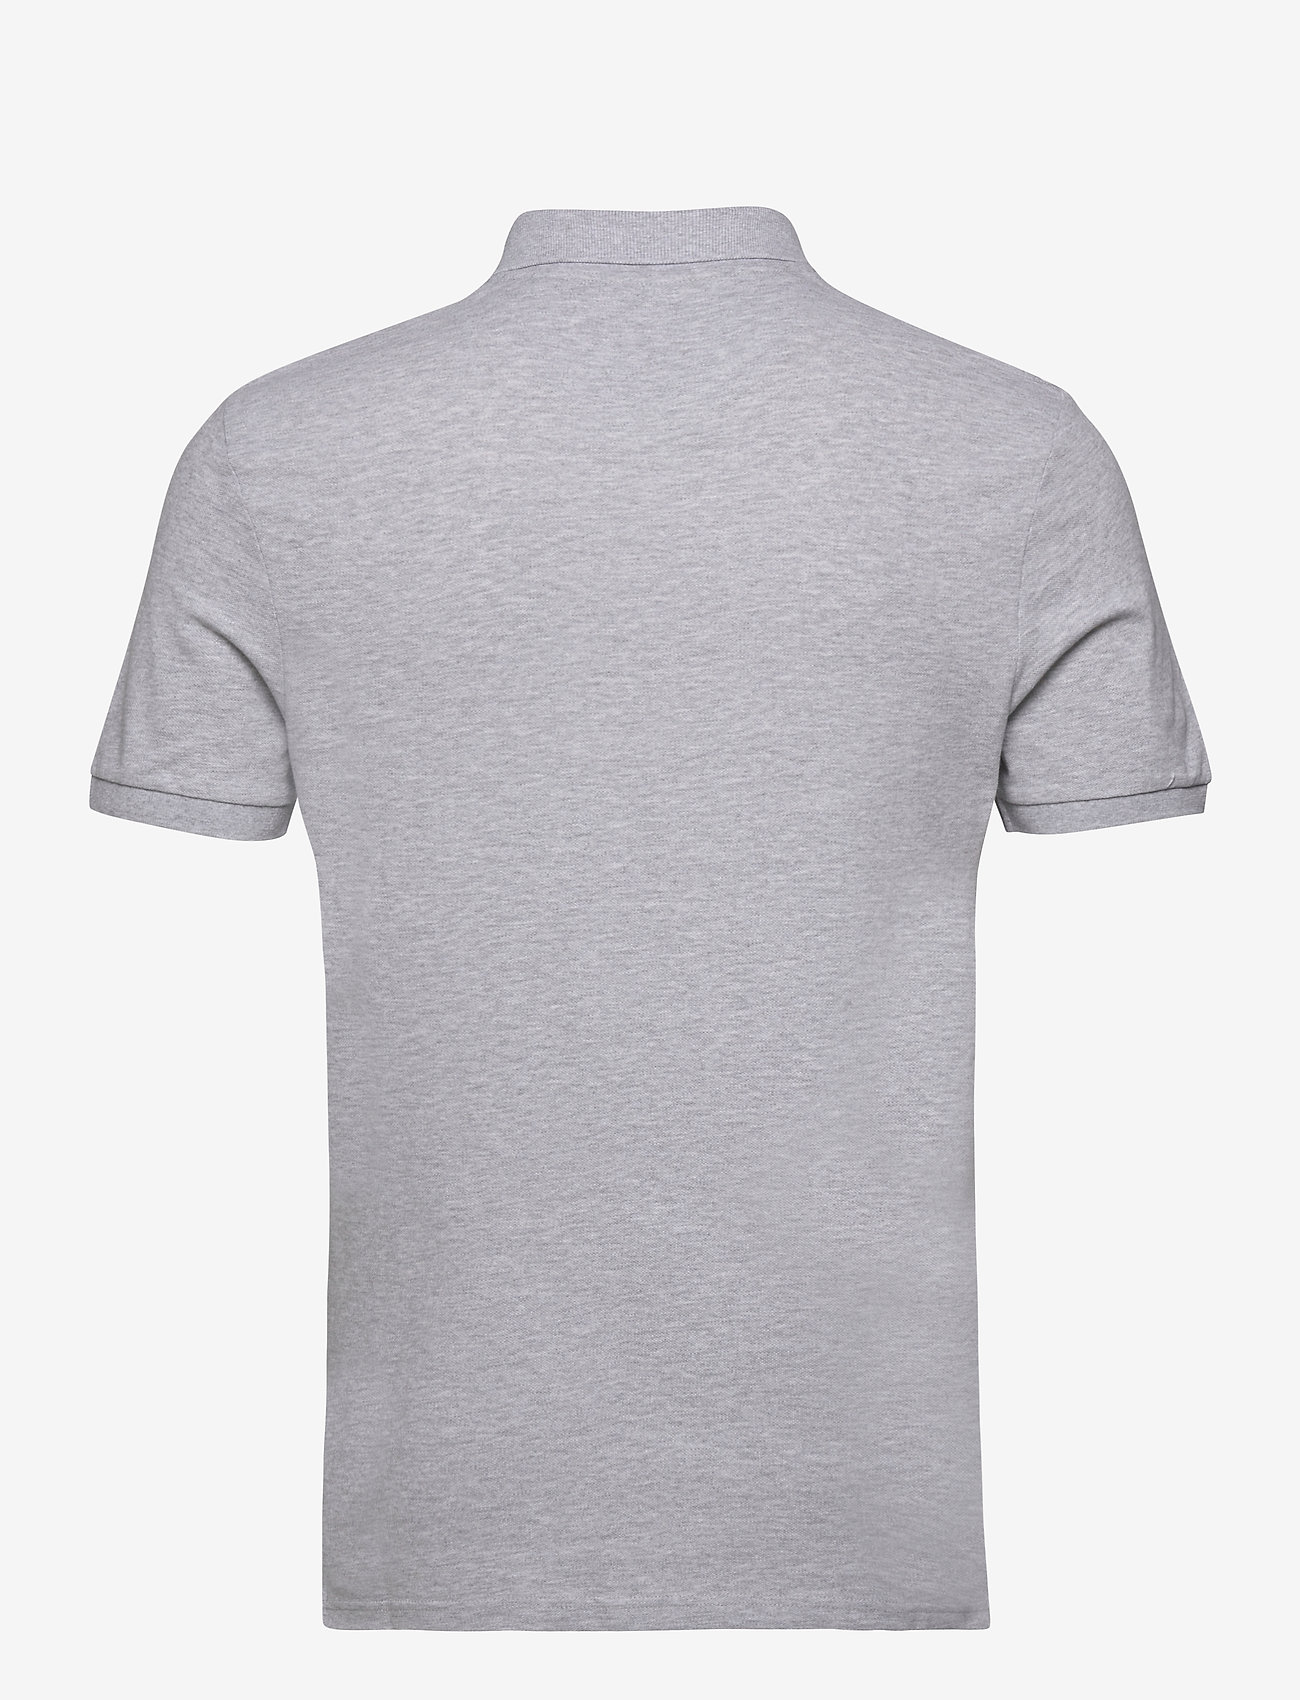 Lyle & Scott - Plain Polo Shirt - lühikeste varrukatega polod - light grey marl - 1